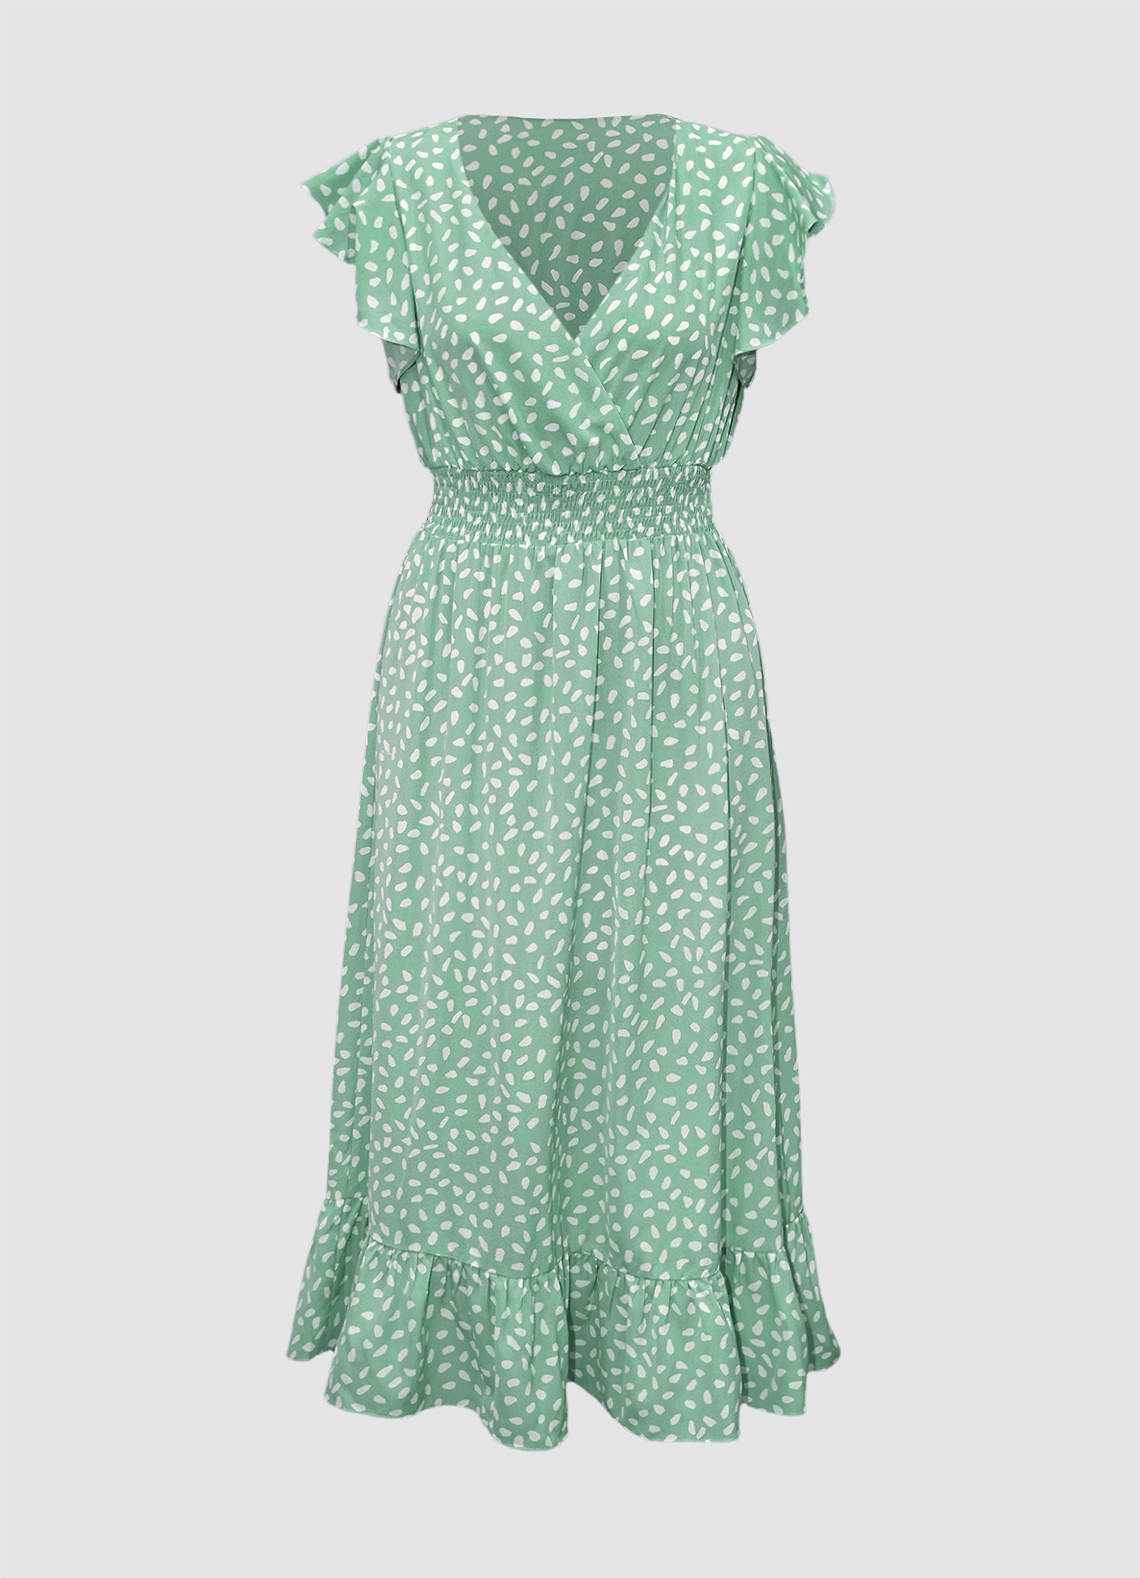 Hello Sweetheart Mint Green Print Flutter Sleeve Maxi Dress image1